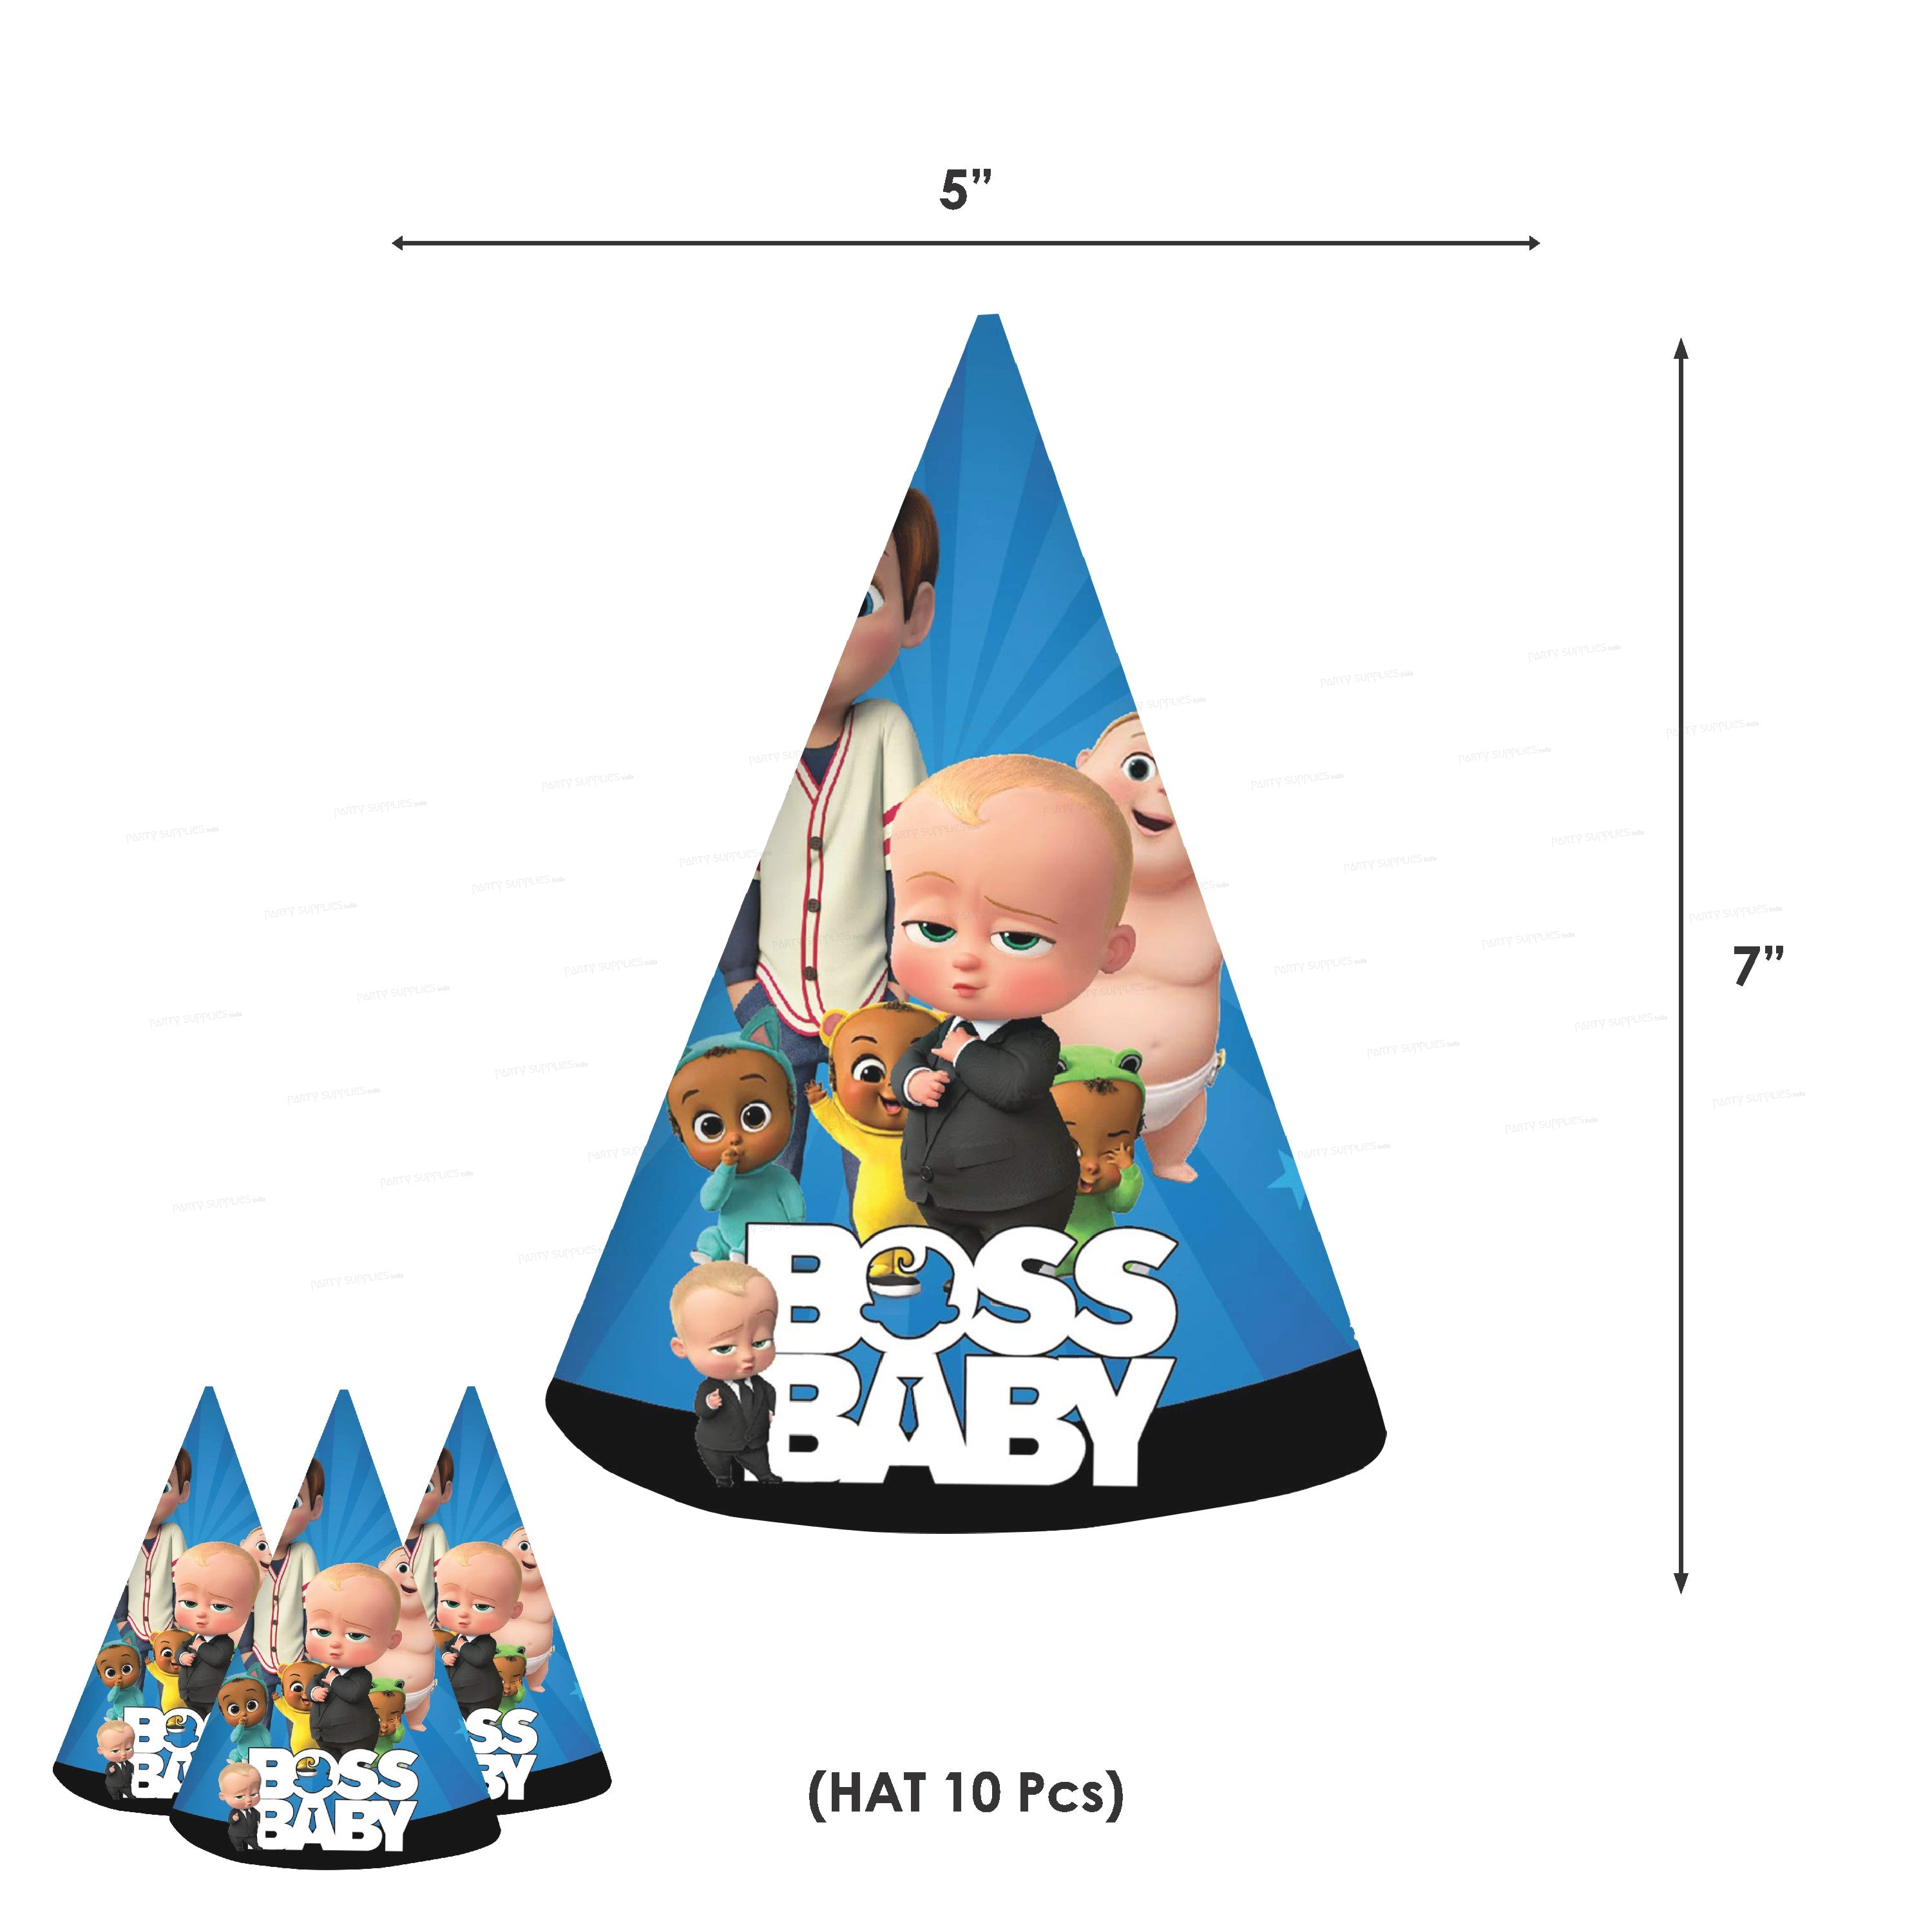 PSI Boss Baby Theme Premium Kit